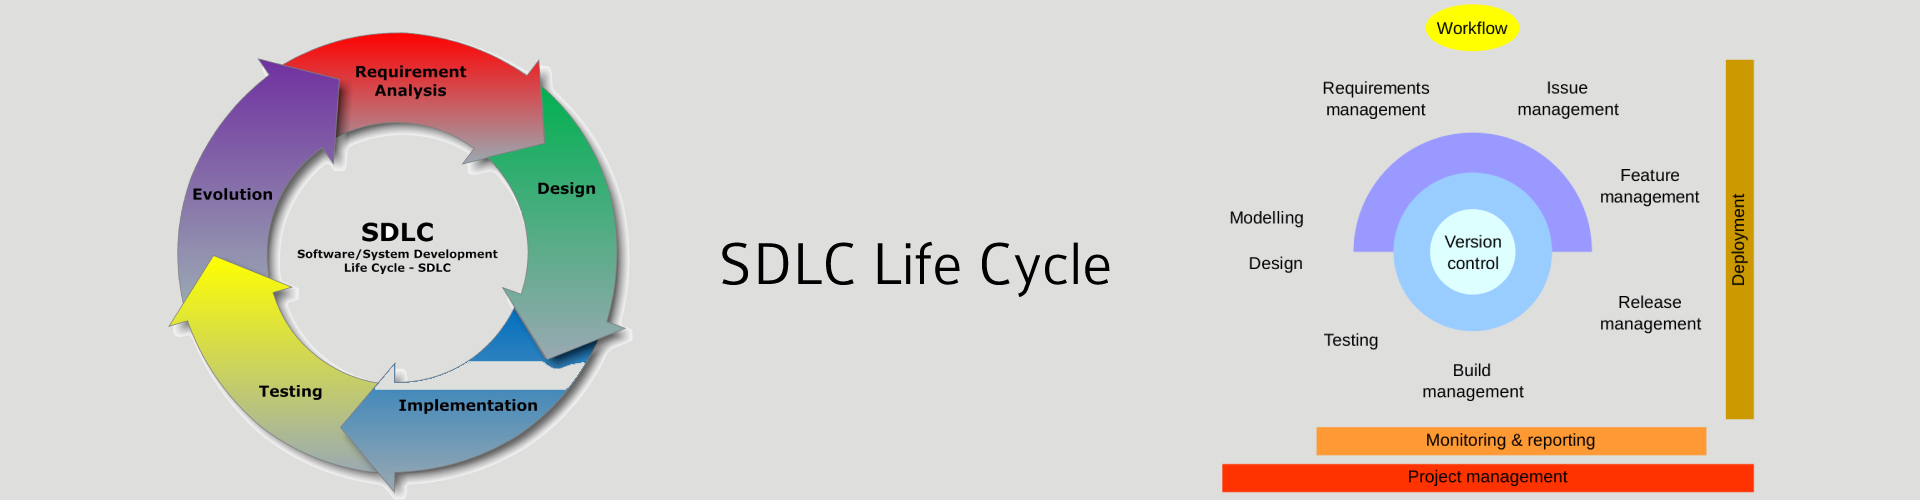 SDLC Life cycle